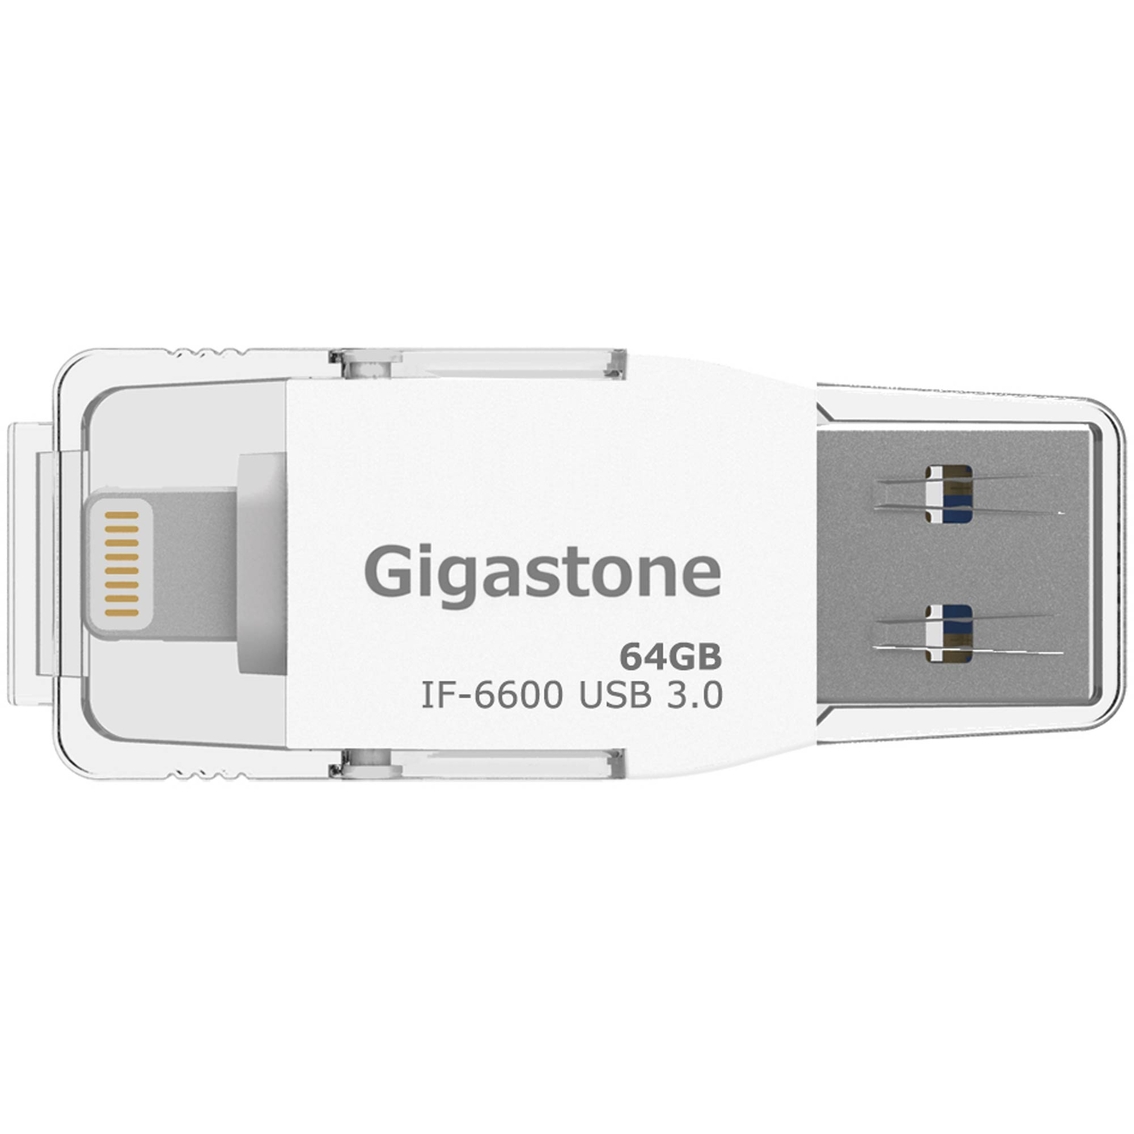 Gigastone 64GB i-FlashDrive Lightning Connector Apple iPhone/iPad USB 3.0 - Image 1 of 3